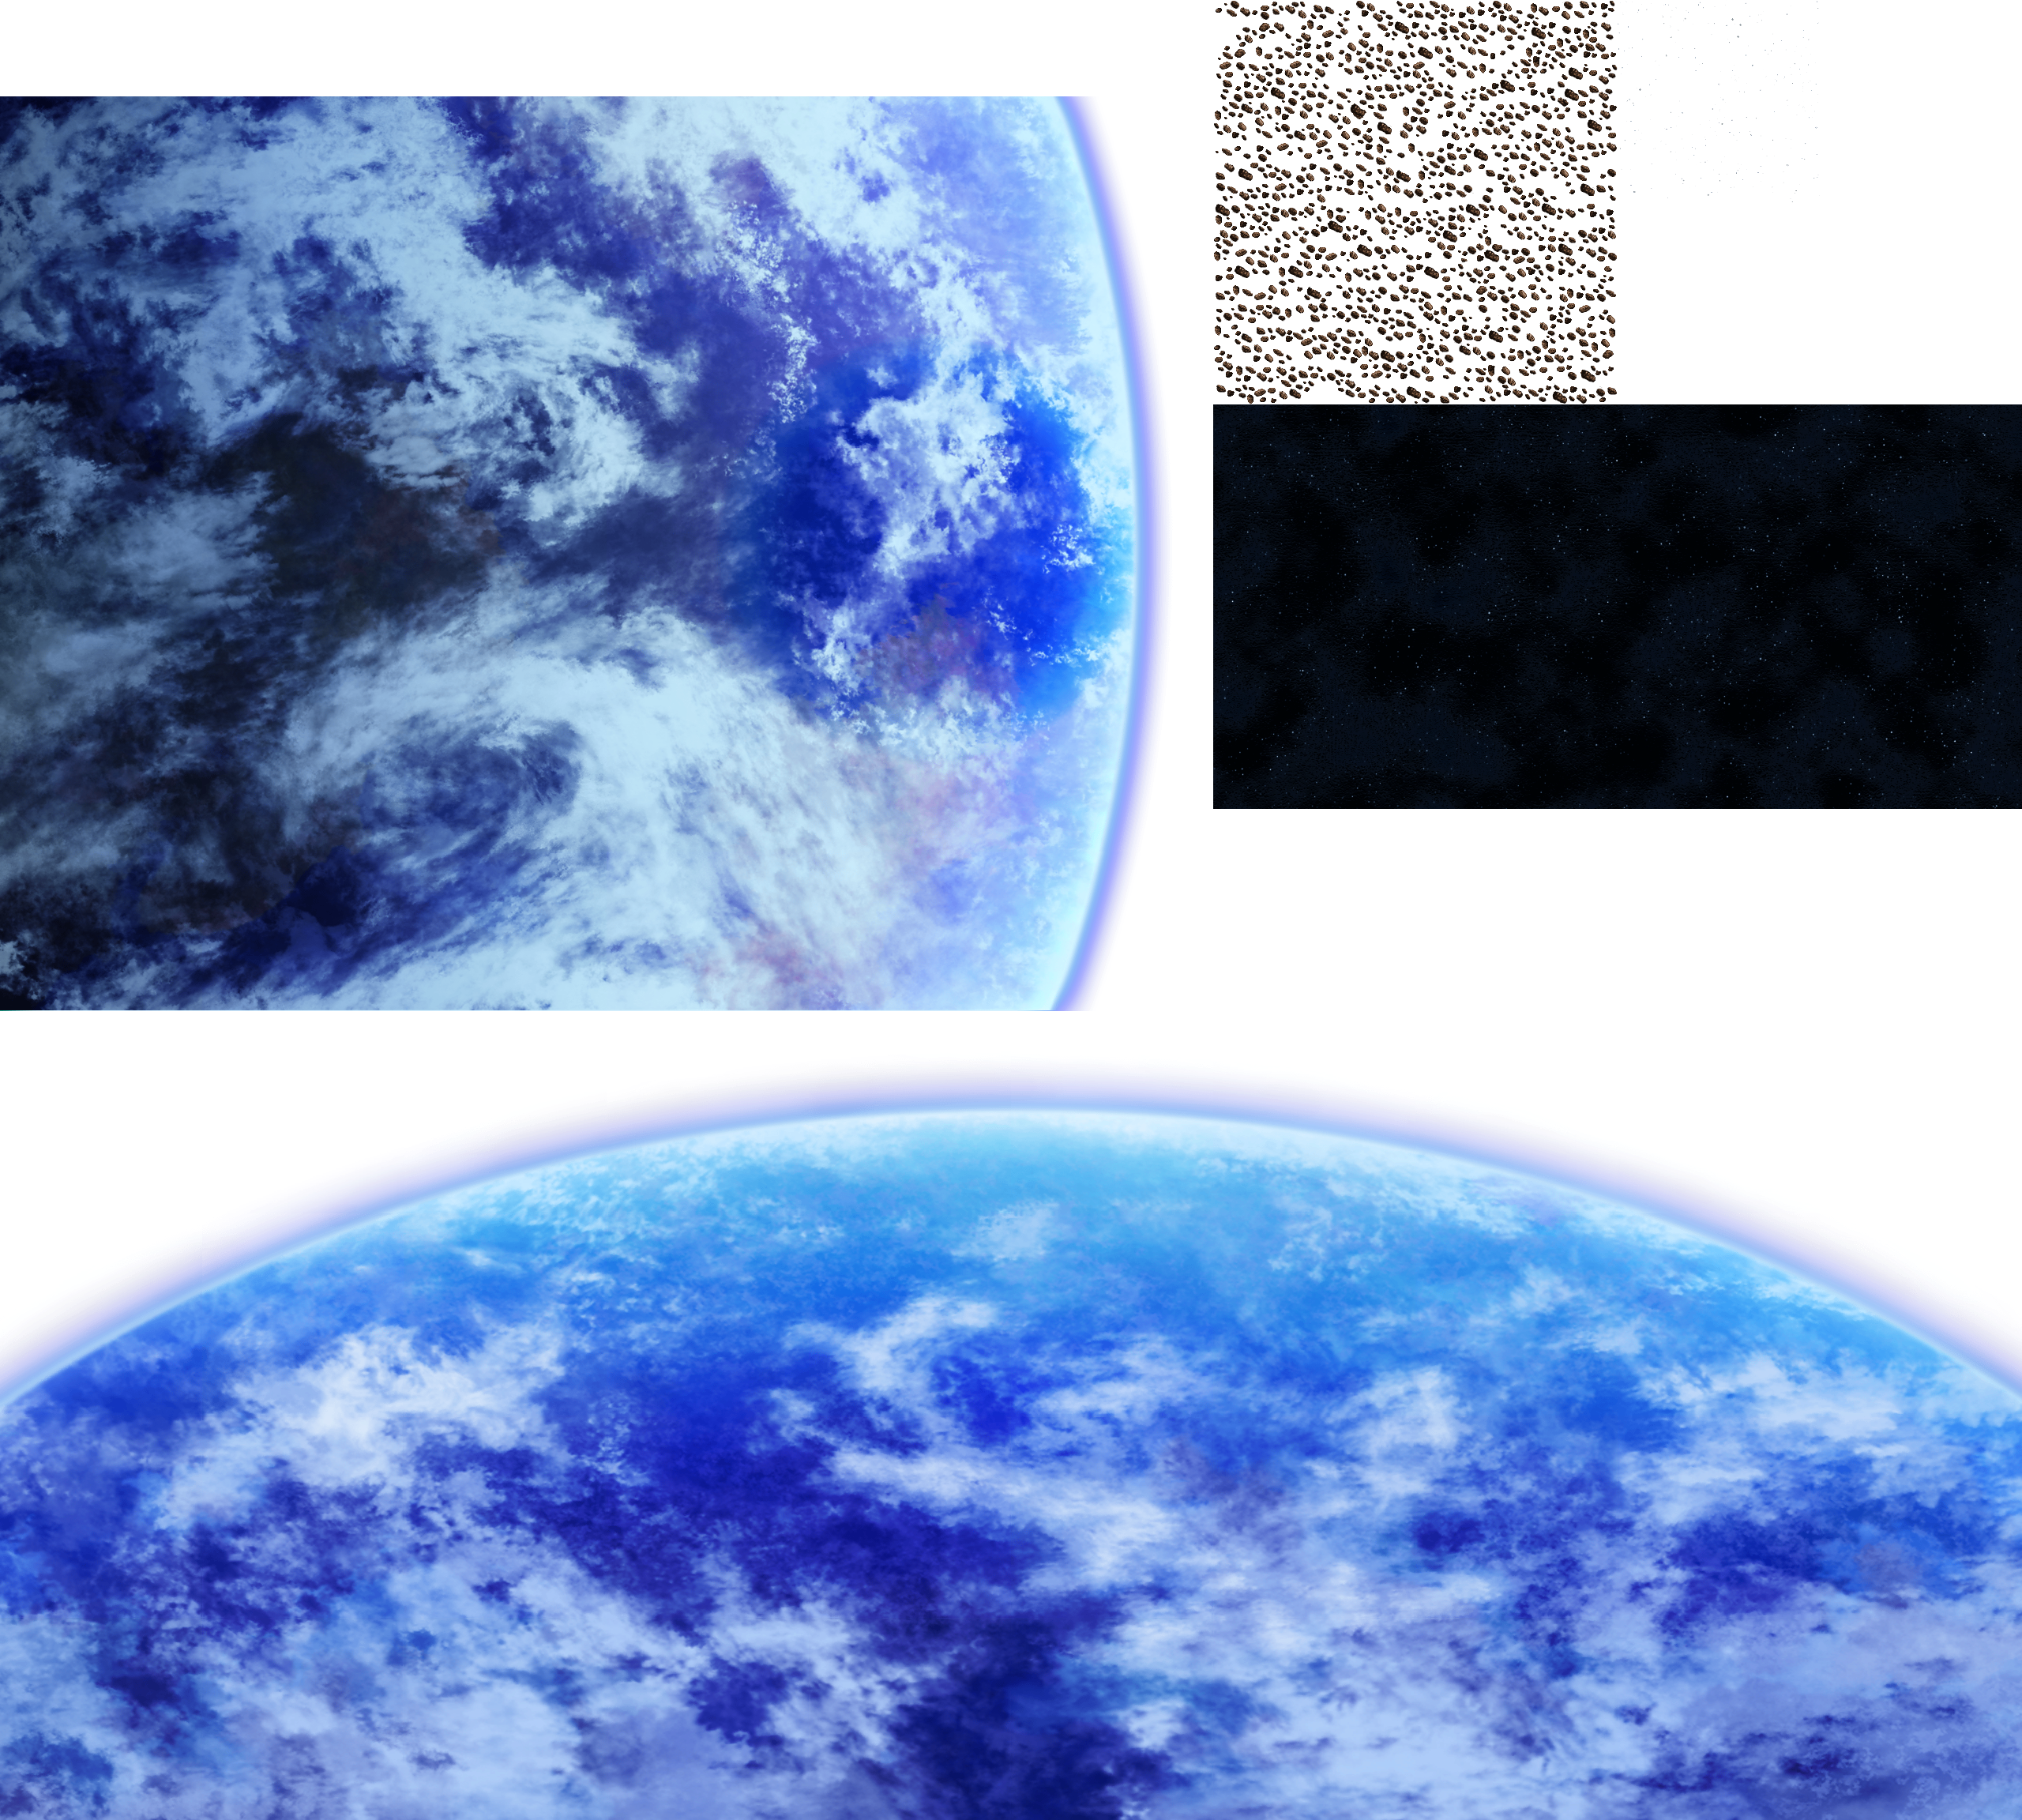 SD Gundam G Generation Spirits - MS IGLOO Stage 4 Space Segment (I Saw The Ocean In Jaburo's Skies)